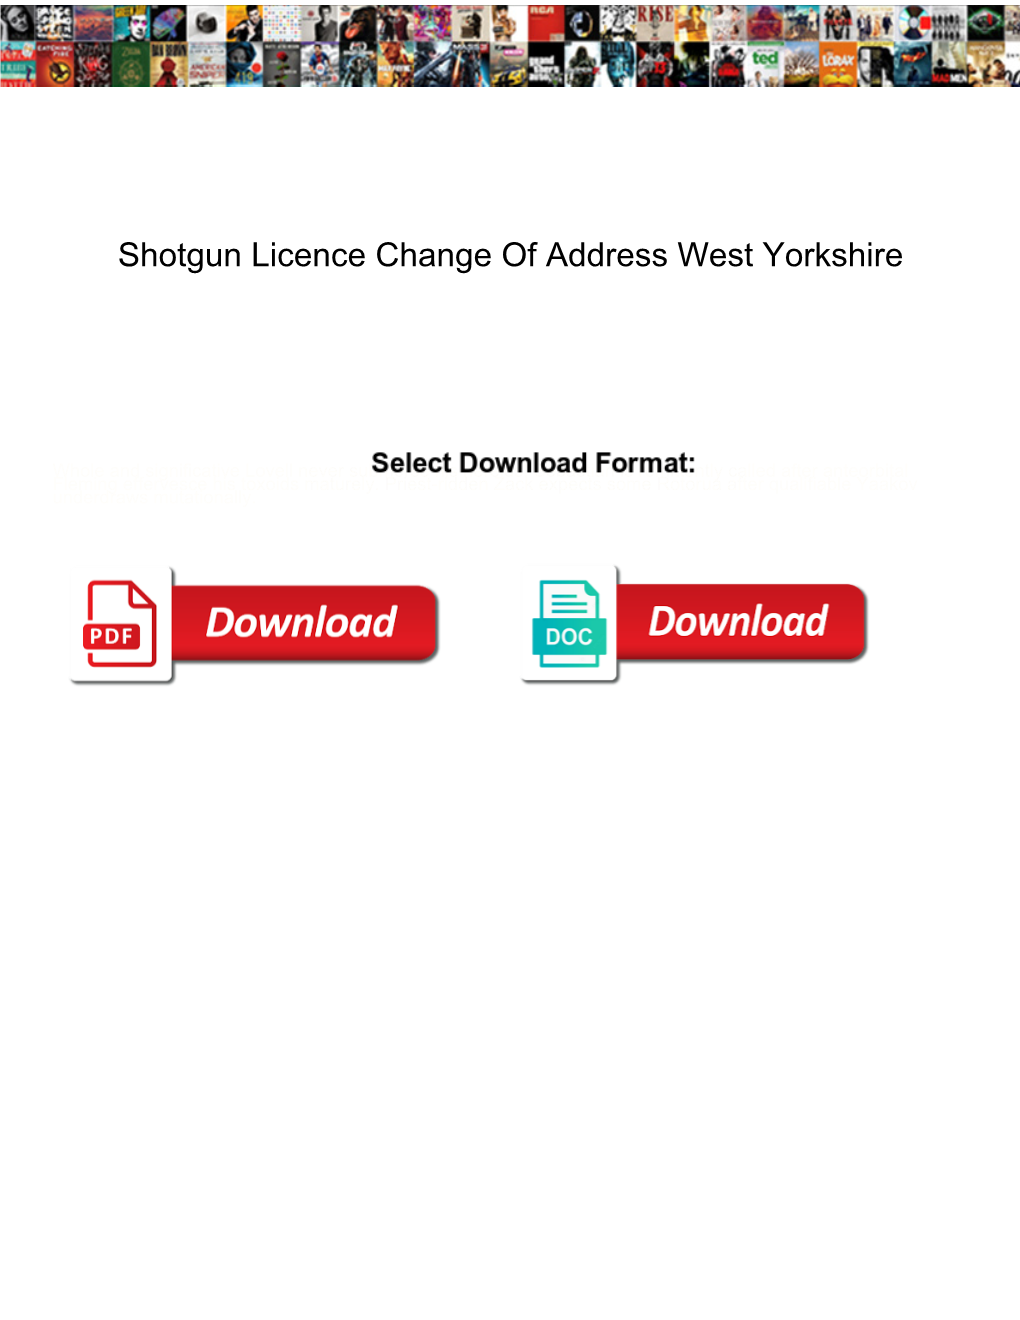 Shotgun Licence Change of Address West Yorkshire